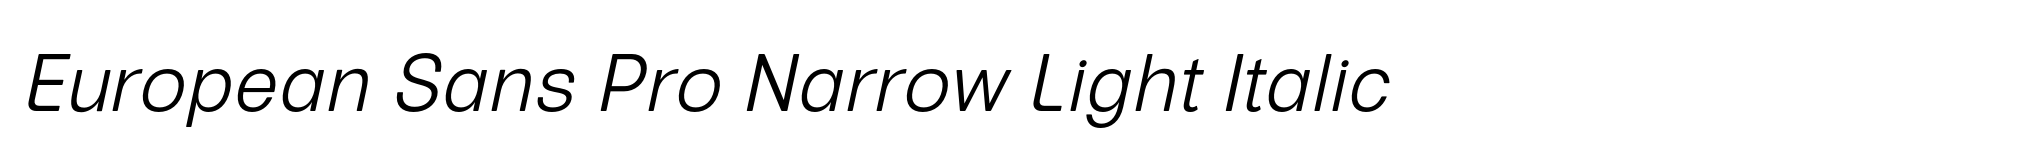 European Sans Pro Narrow Light Italic image